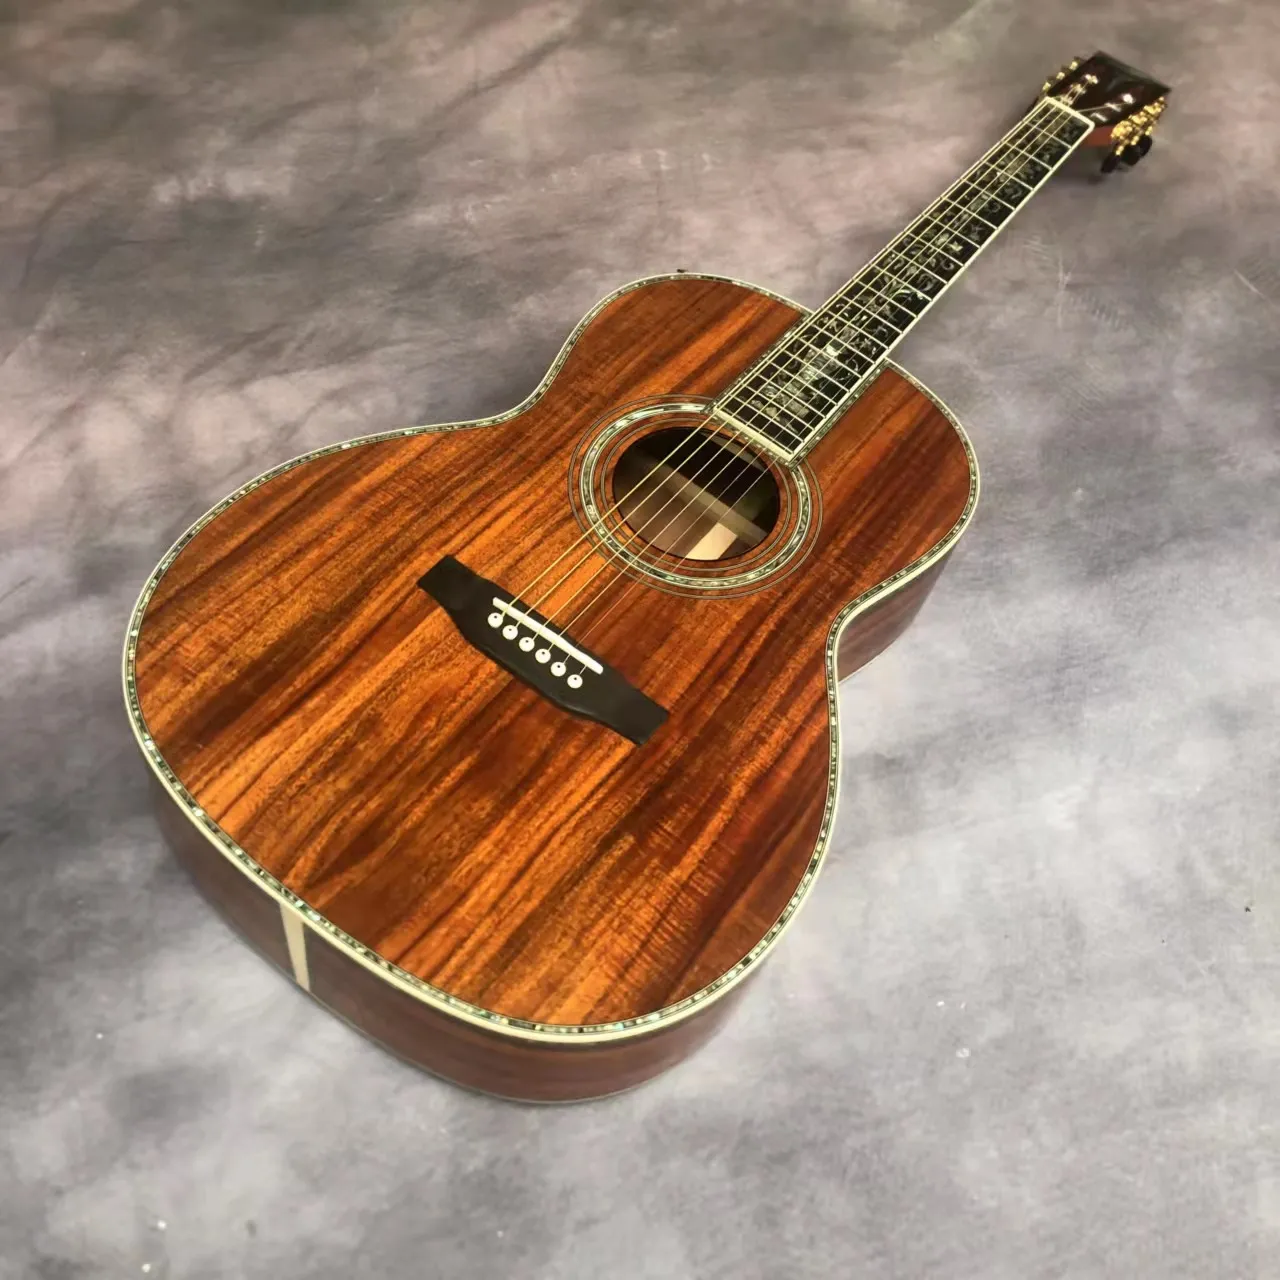 39 "Volledige Koa Wood 0045 Luxe zwarte vinger Abalone Shell Mozaïek akoestische akoestische gitaar